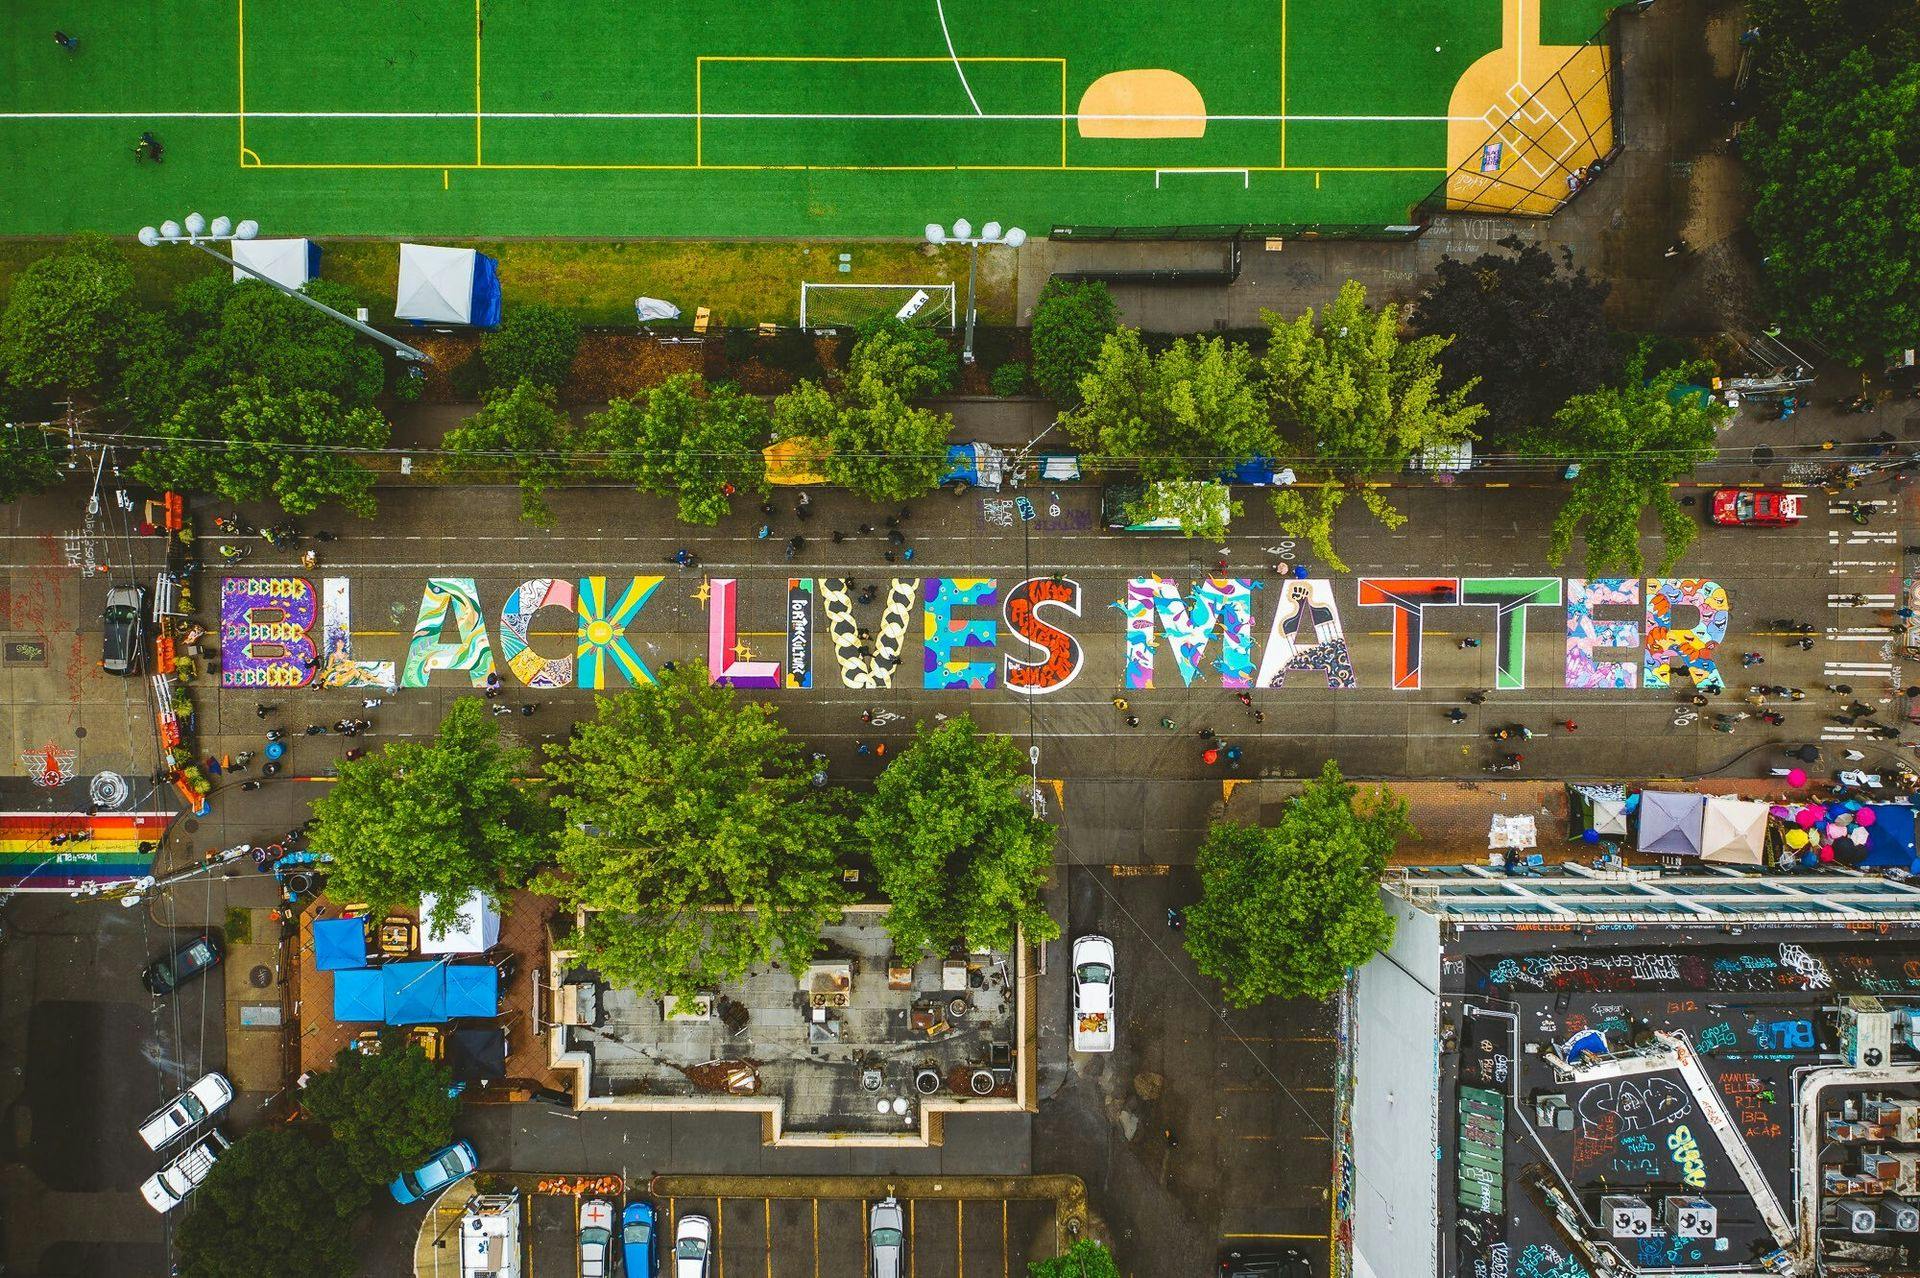 A vibrant street mural spells out Black Lives Matter